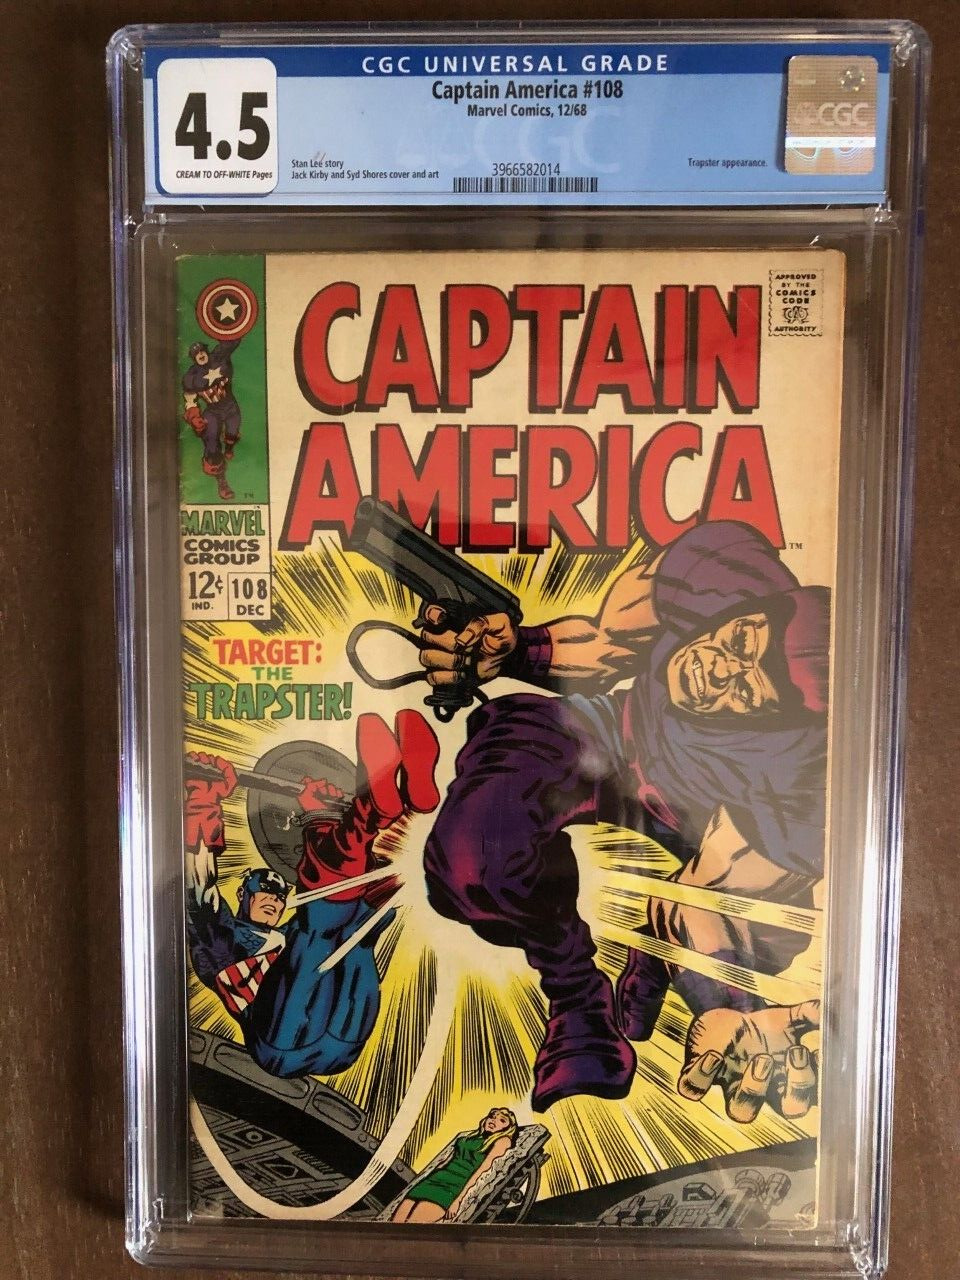 Captain America #108, December 1968, Marvel Comics, CGC Grade 4.5 VG+